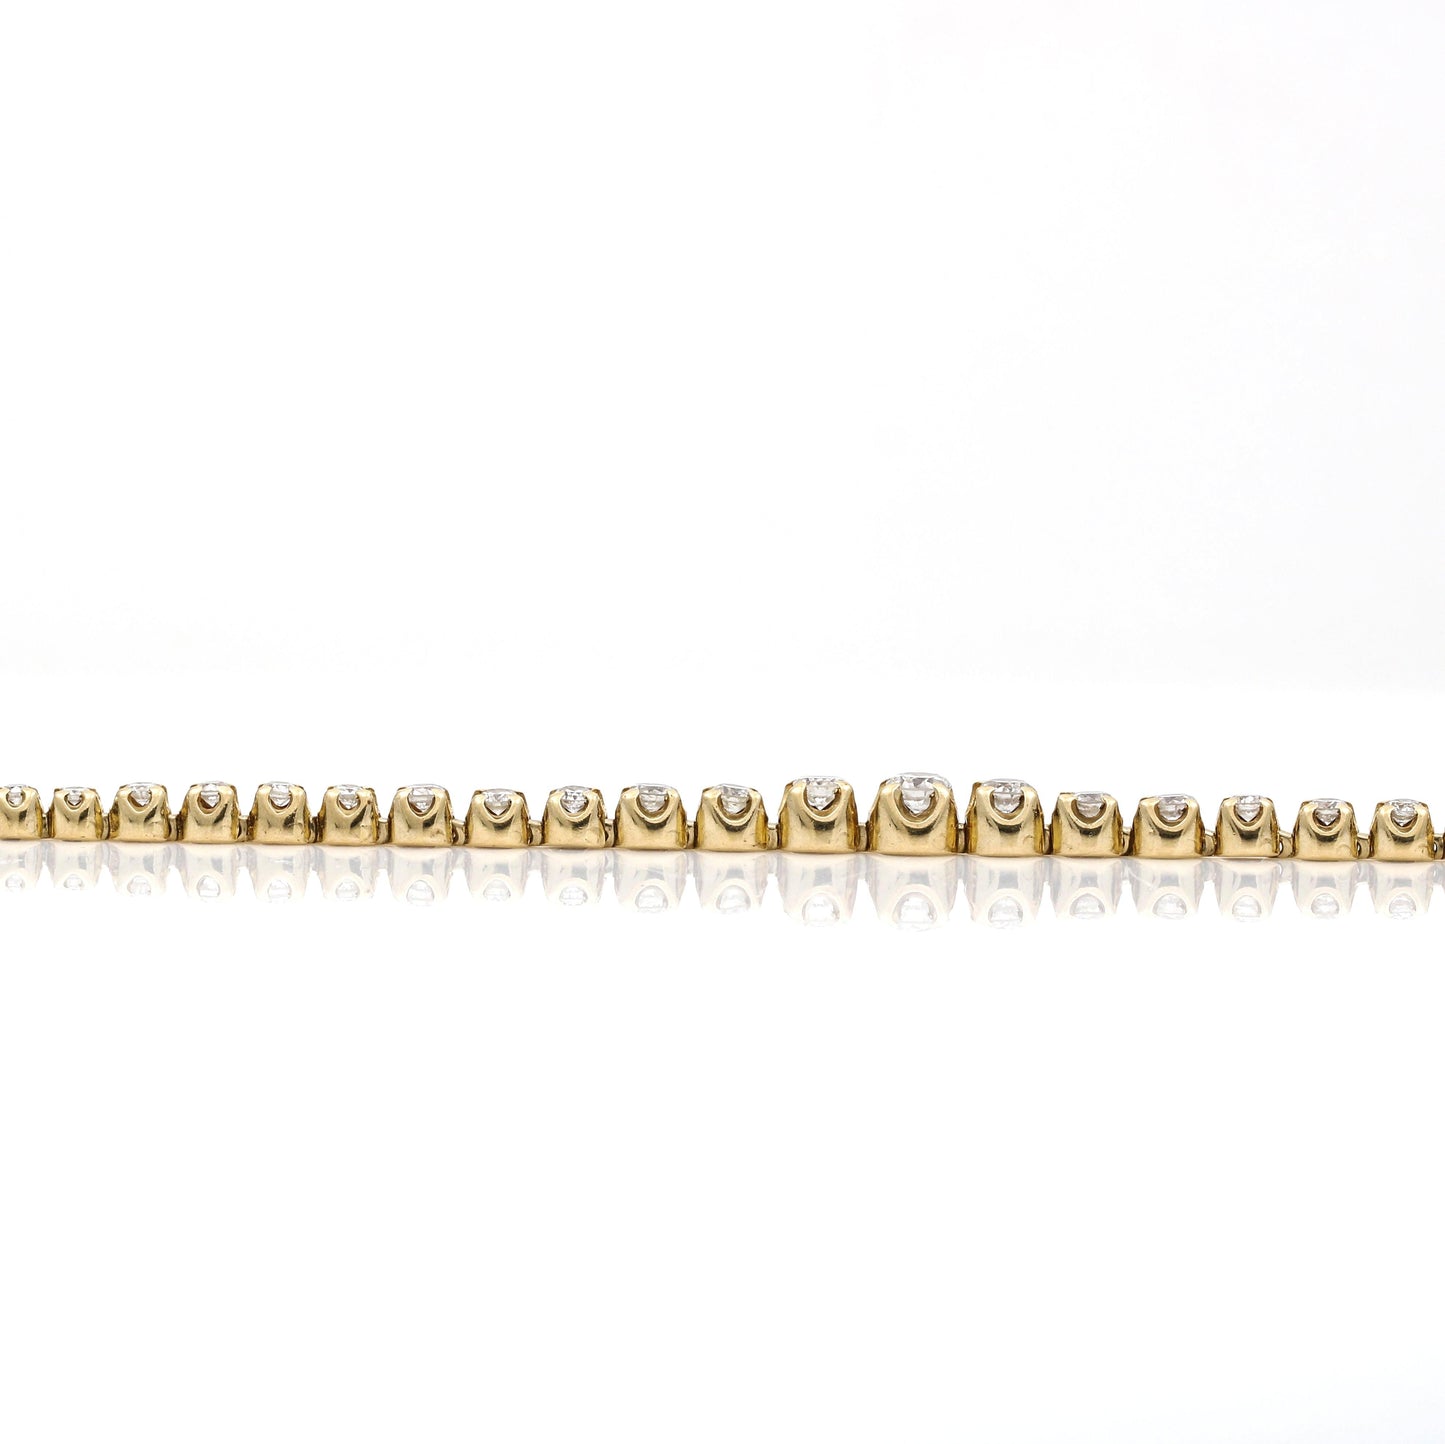 2.00 ct Diamond Bracelet in 14k Yellow Gold - 31 Jewels Inc.